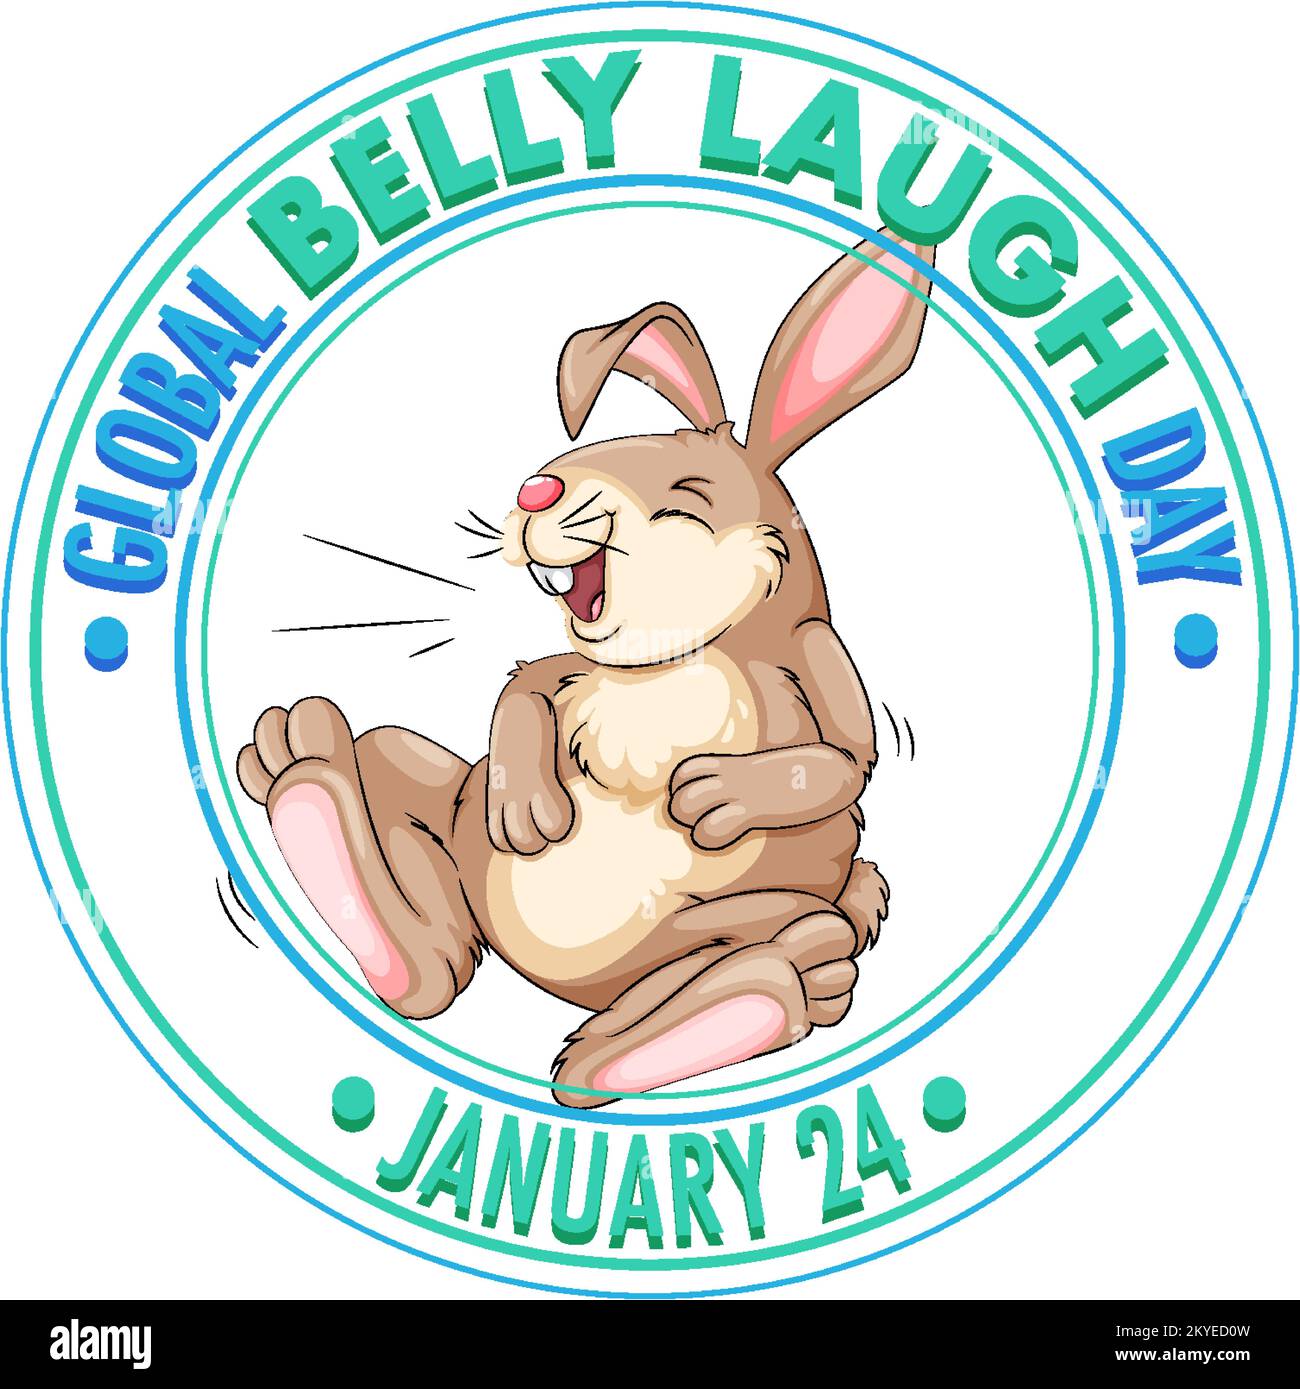 Global belly laugh day logo banner illustration Stock Vector